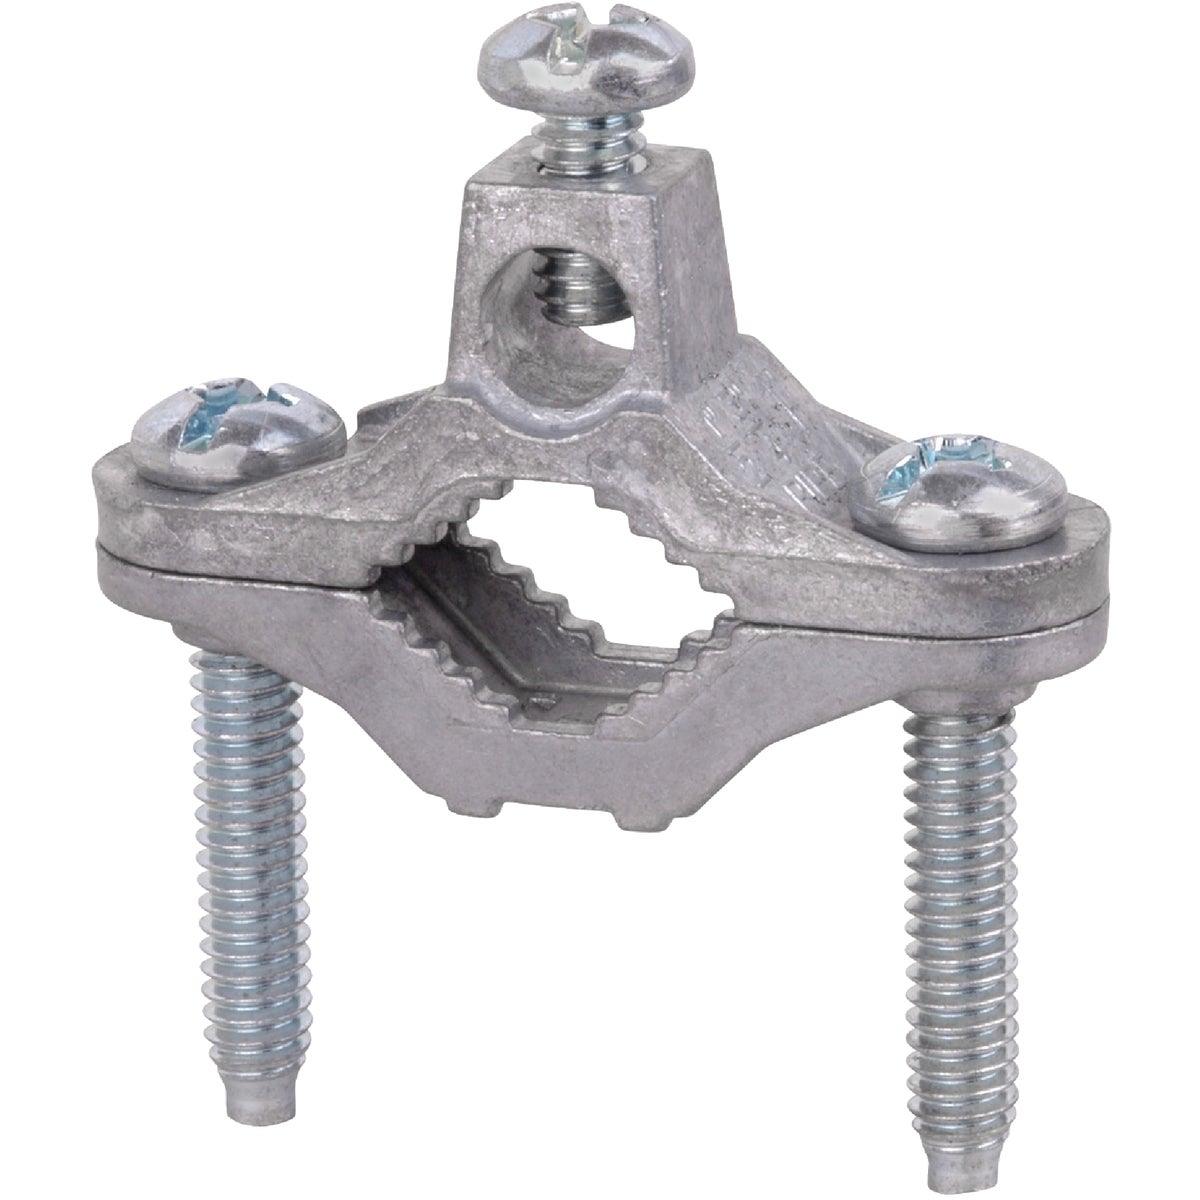 Item 510398, (L160) Set screw type ground clamp. Zinc die-cast construction.